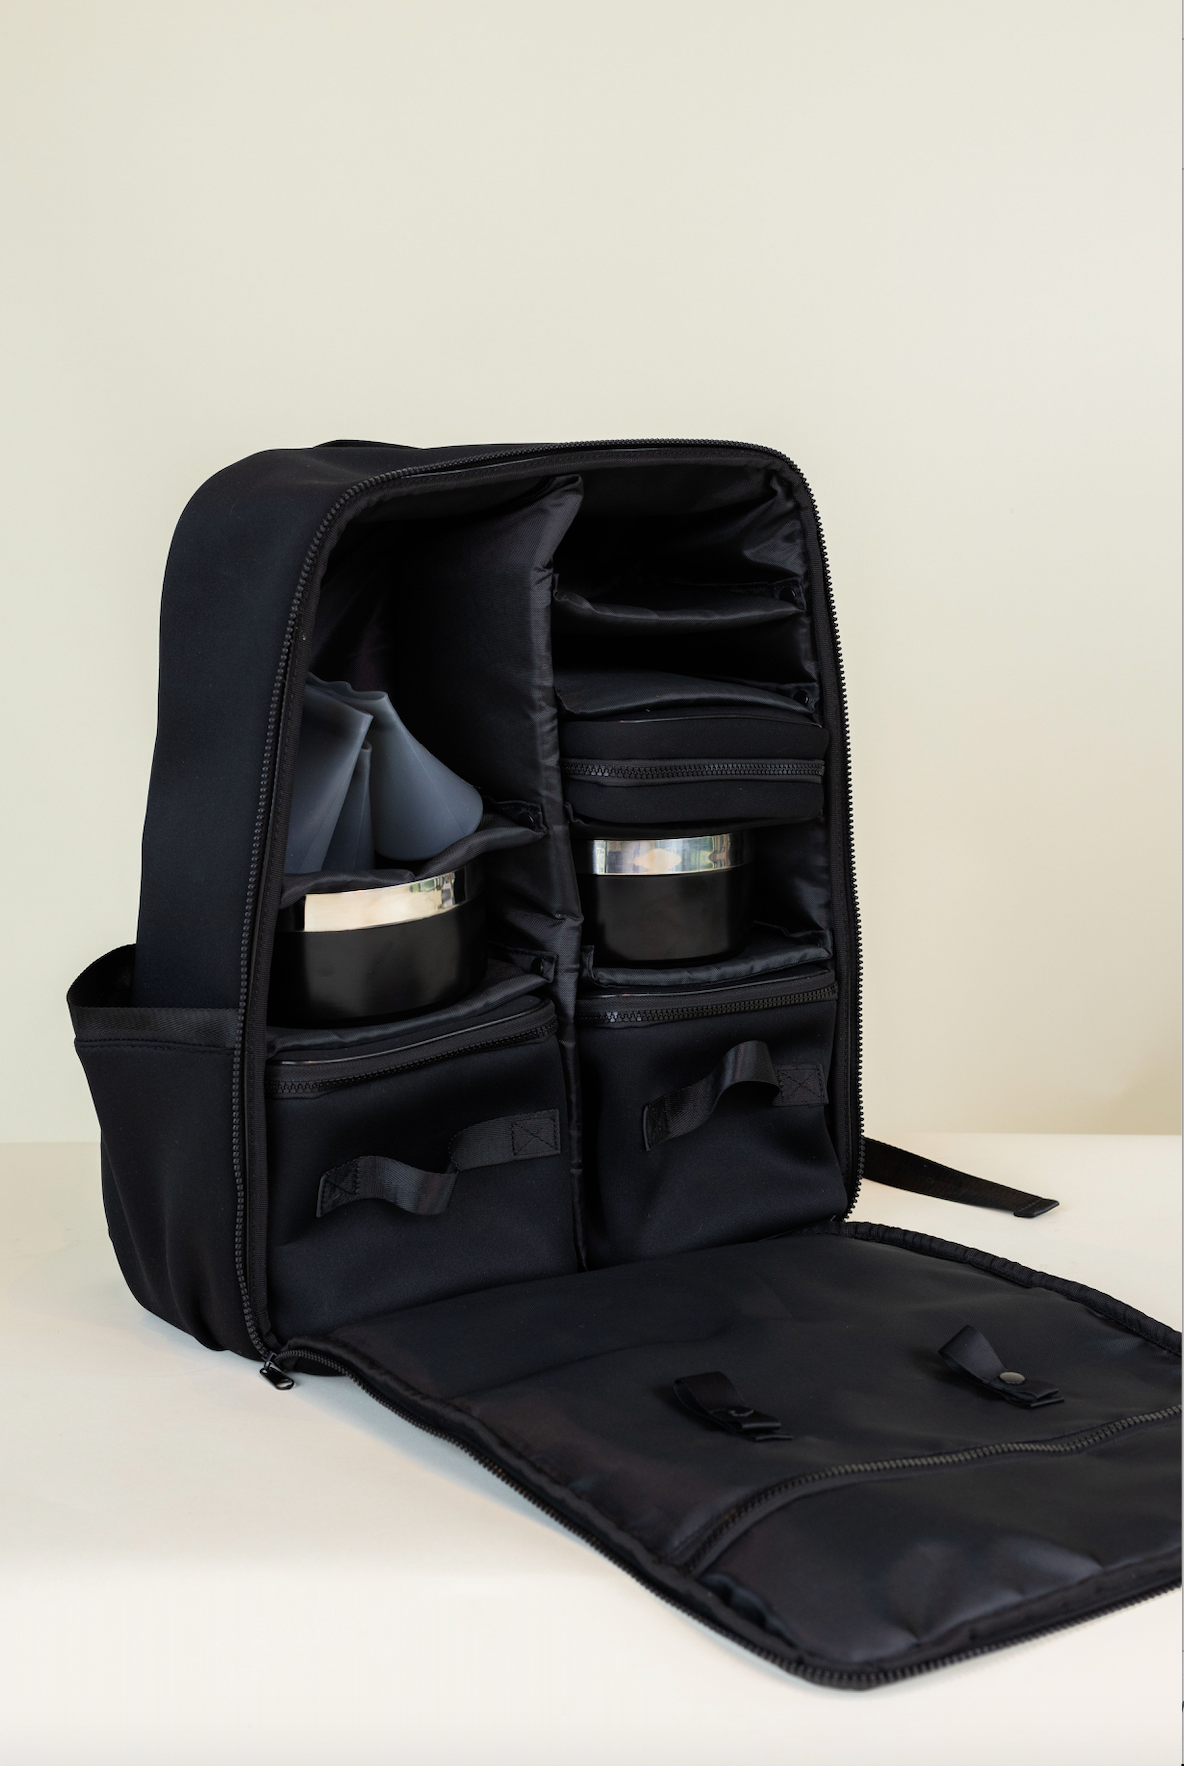 The Modern Dog Company Travel Backpack